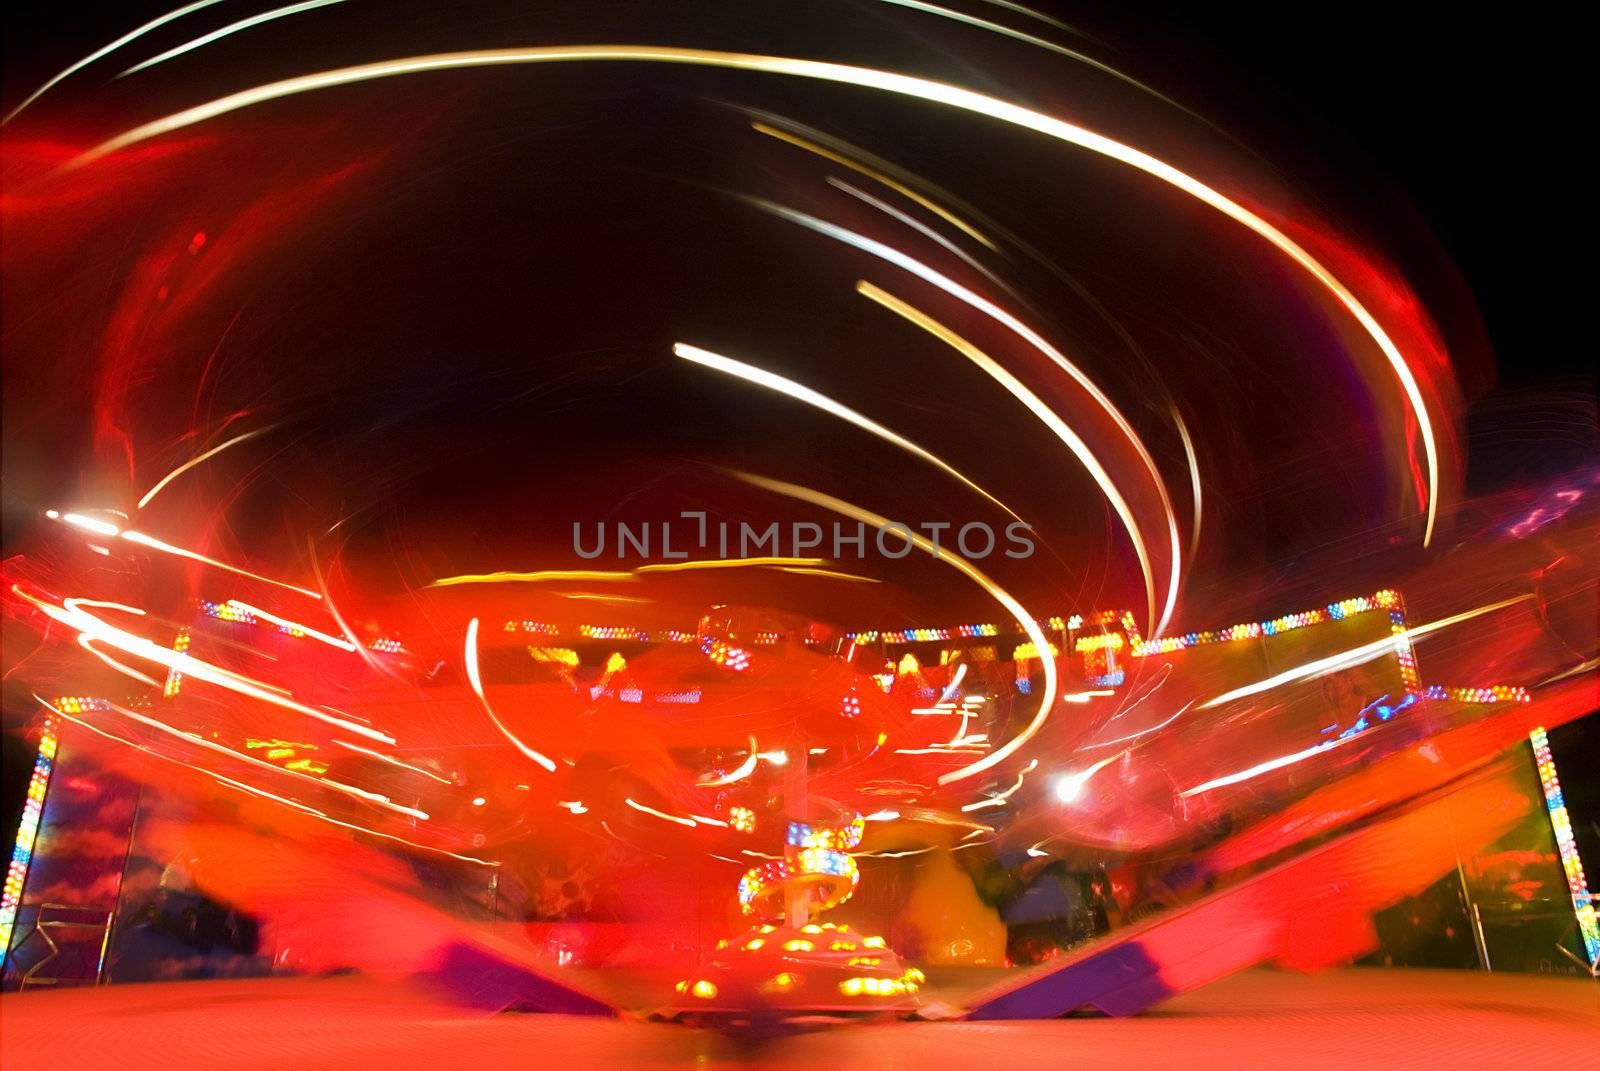 Blur neon lights in amusement park, long exposure